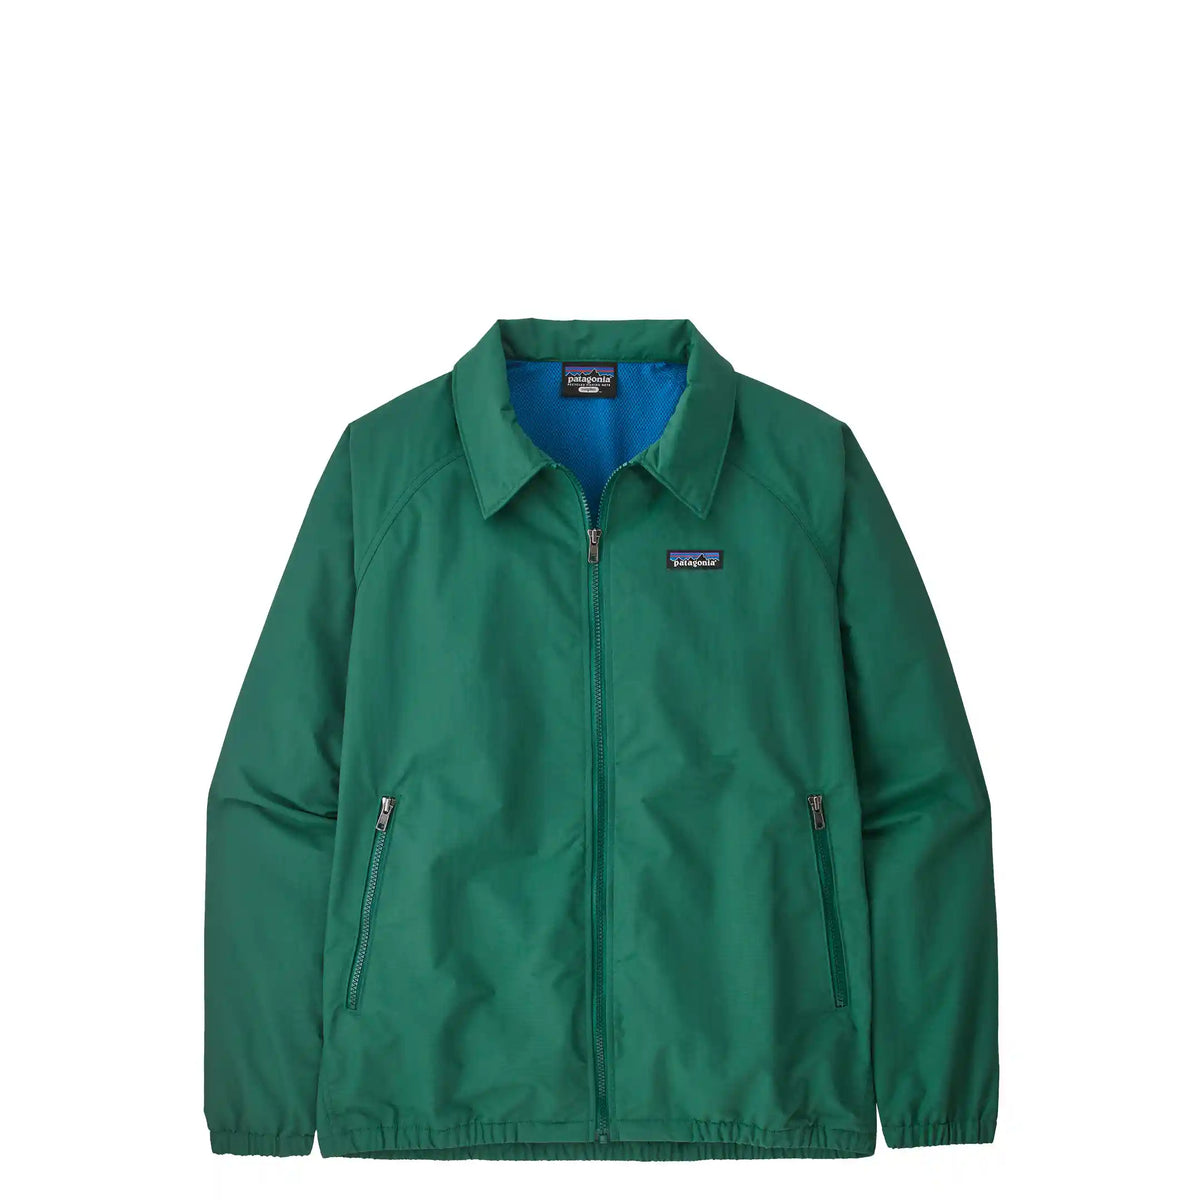 Patagonia Baggies Jacket, conifer green, 28152-cifg – Norwood